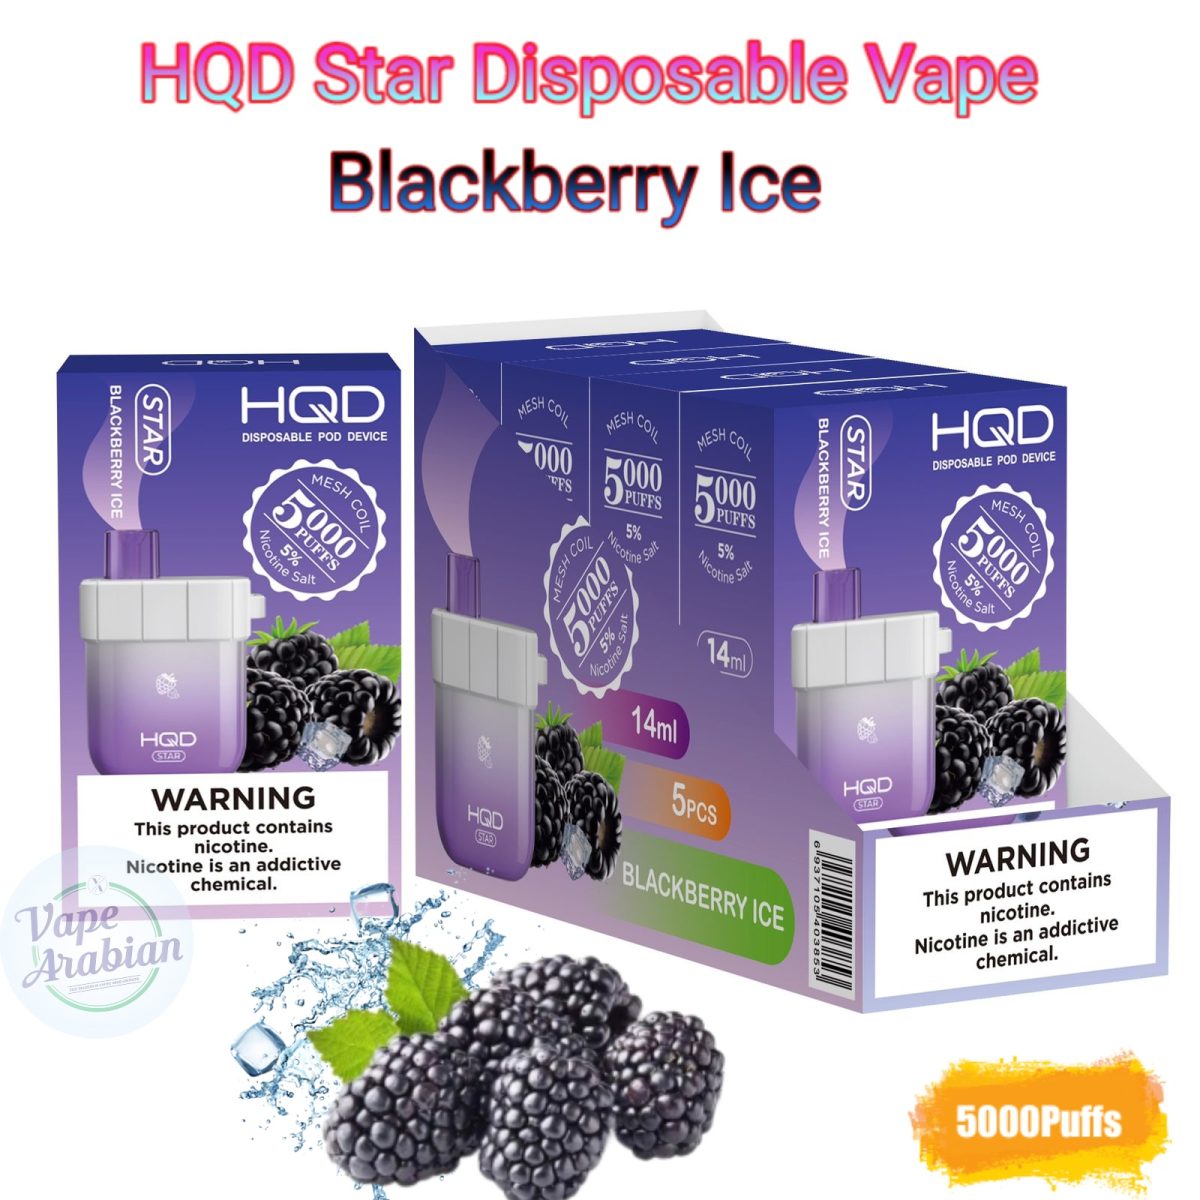 HQD Star Disposable Vape 5000 Puffs- Blackberry Ice